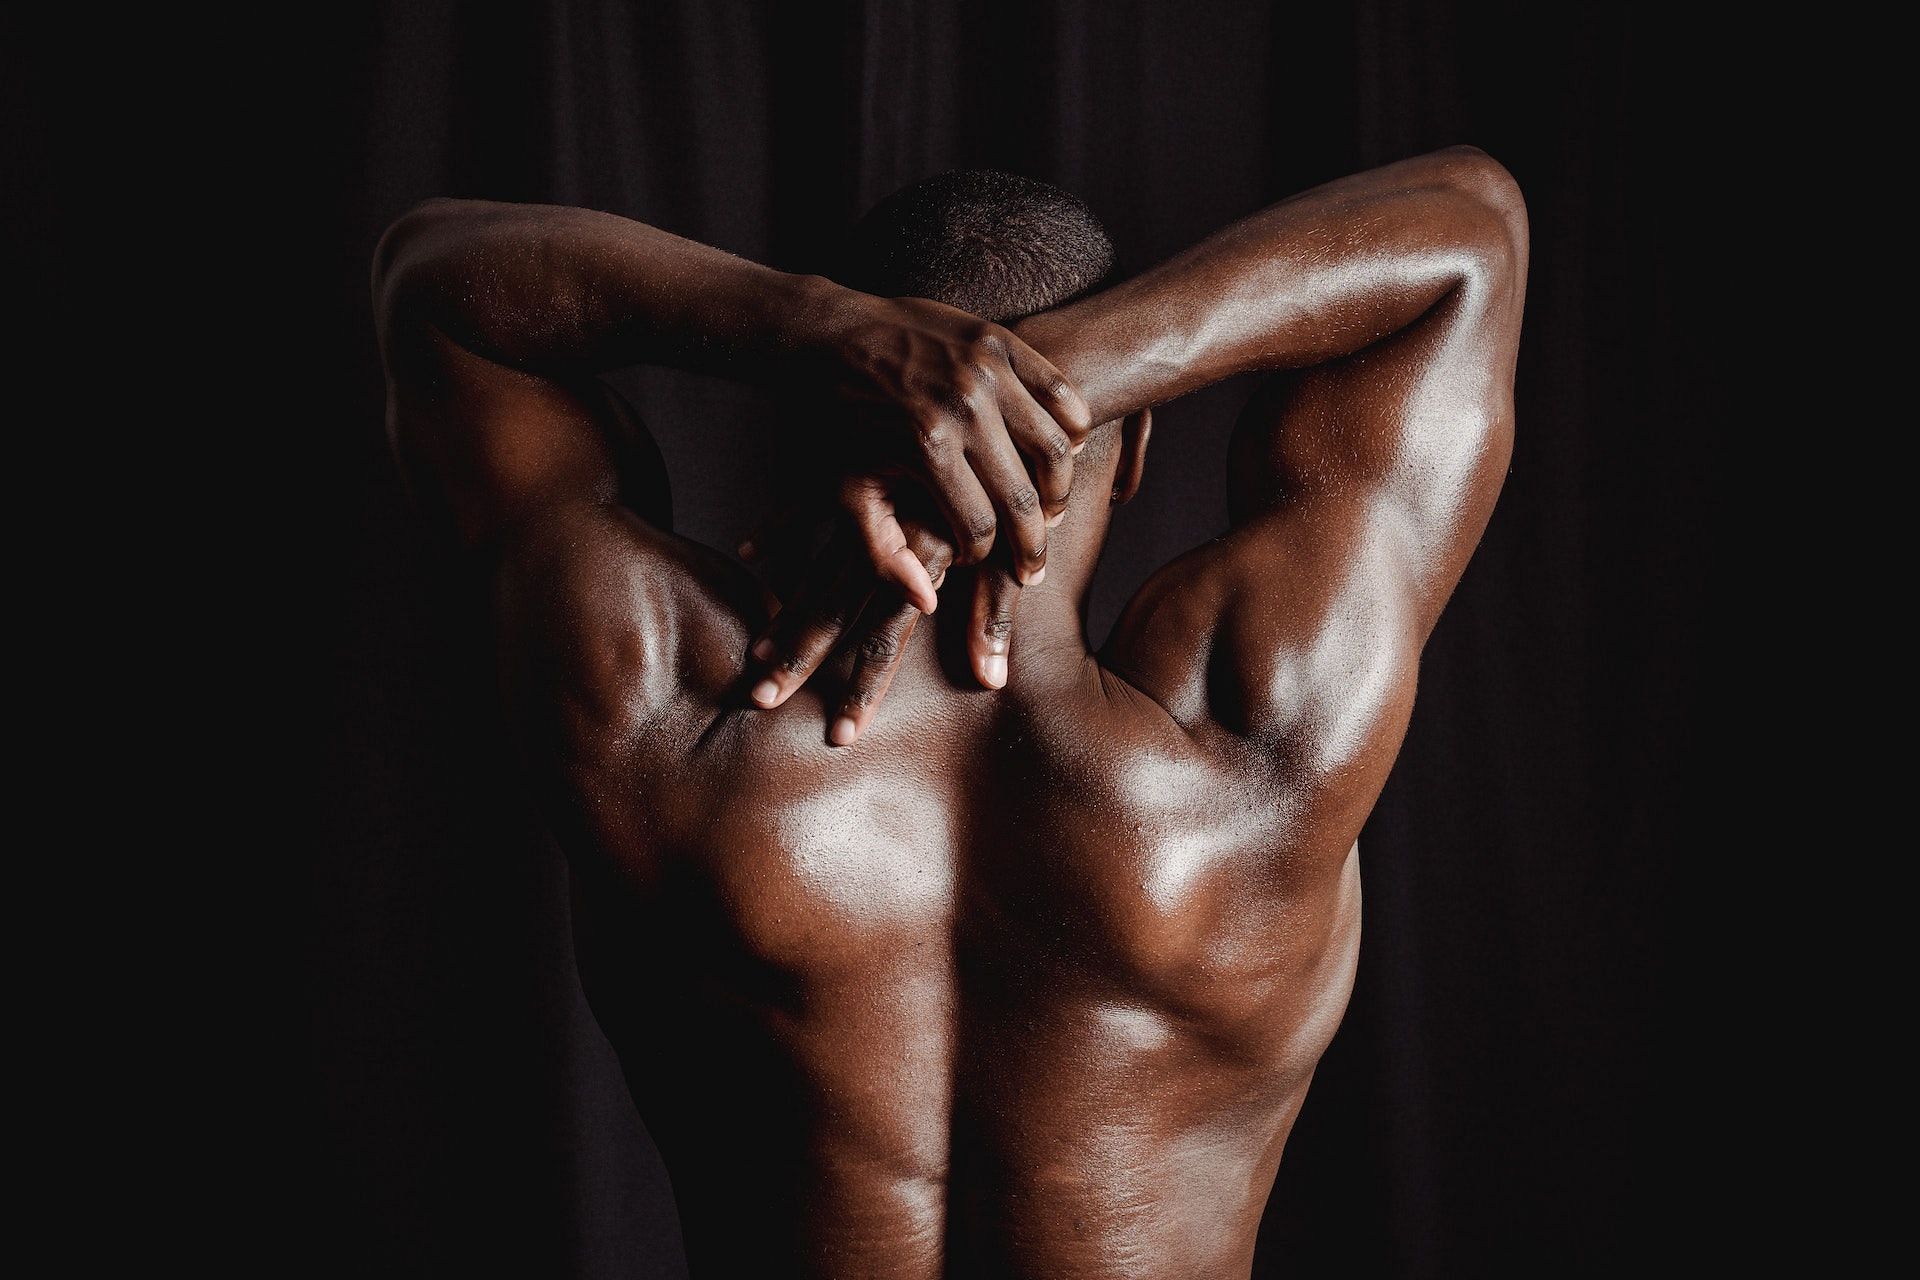 A wide back gives a V-shaped torso .(Photo via Pexels/Mike Jones)